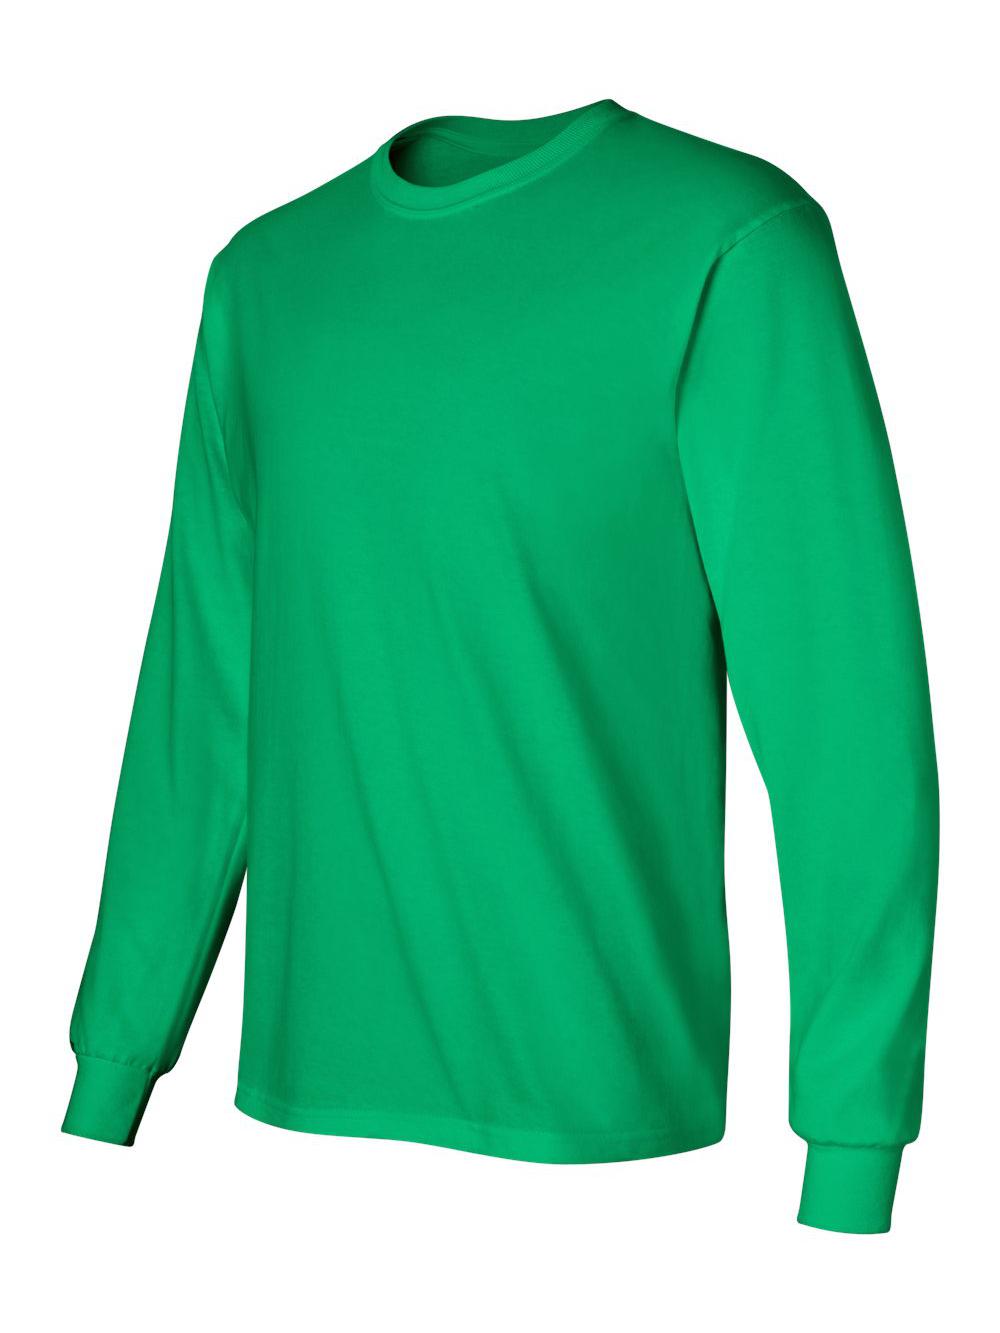 Gildan Unisex Ultra Cotton Long Sleeve T-Shirt - image 2 of 3